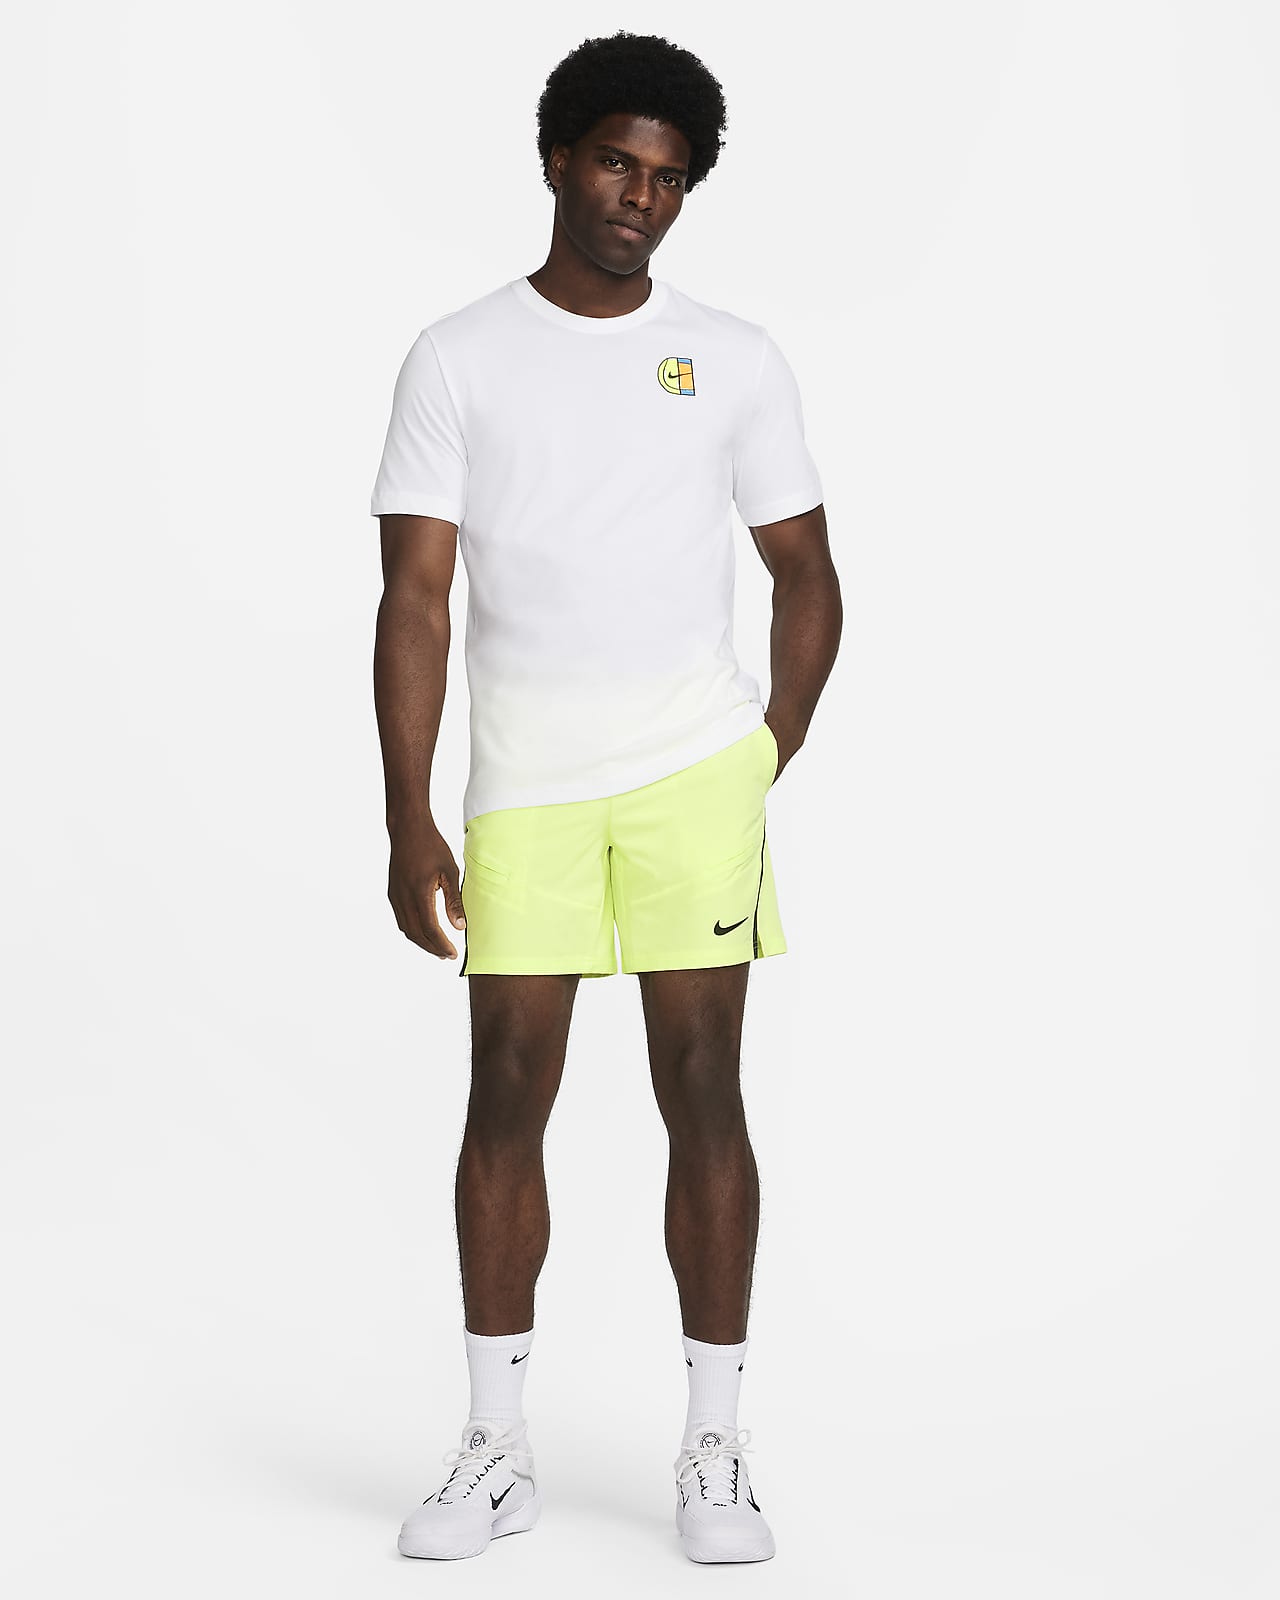 Tennis Shorts – Fashionable & Affordable Tennis Shorts for Men & Women